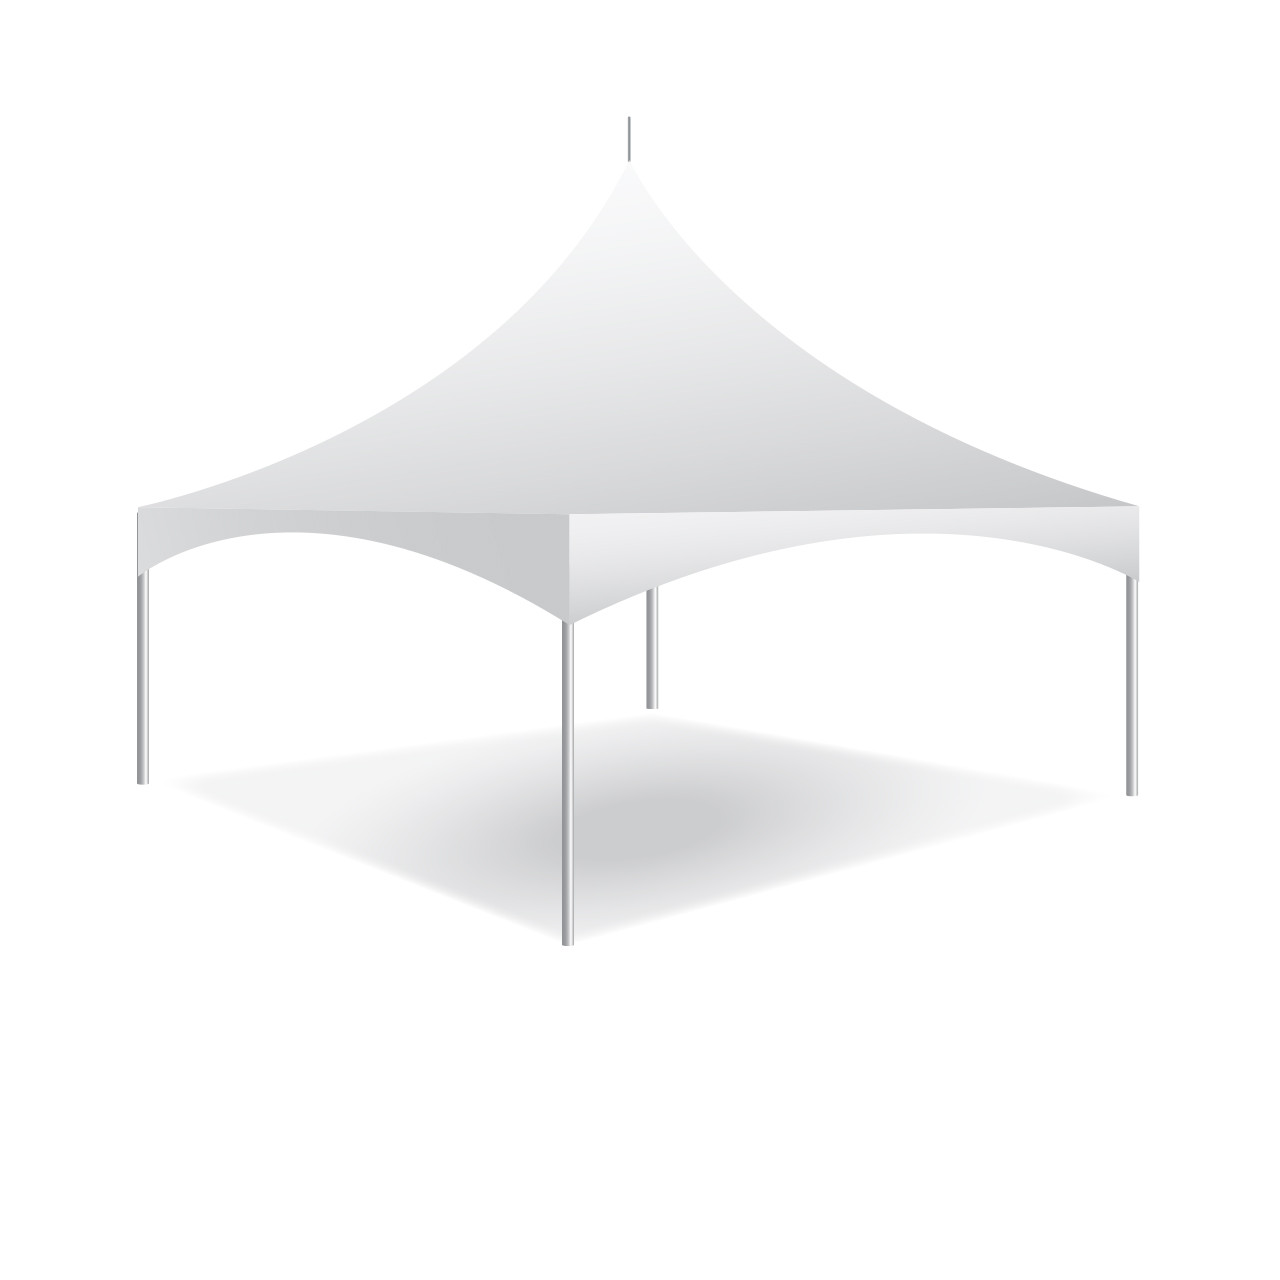 40x40 Master Series Frame Tent — Beyond Tent